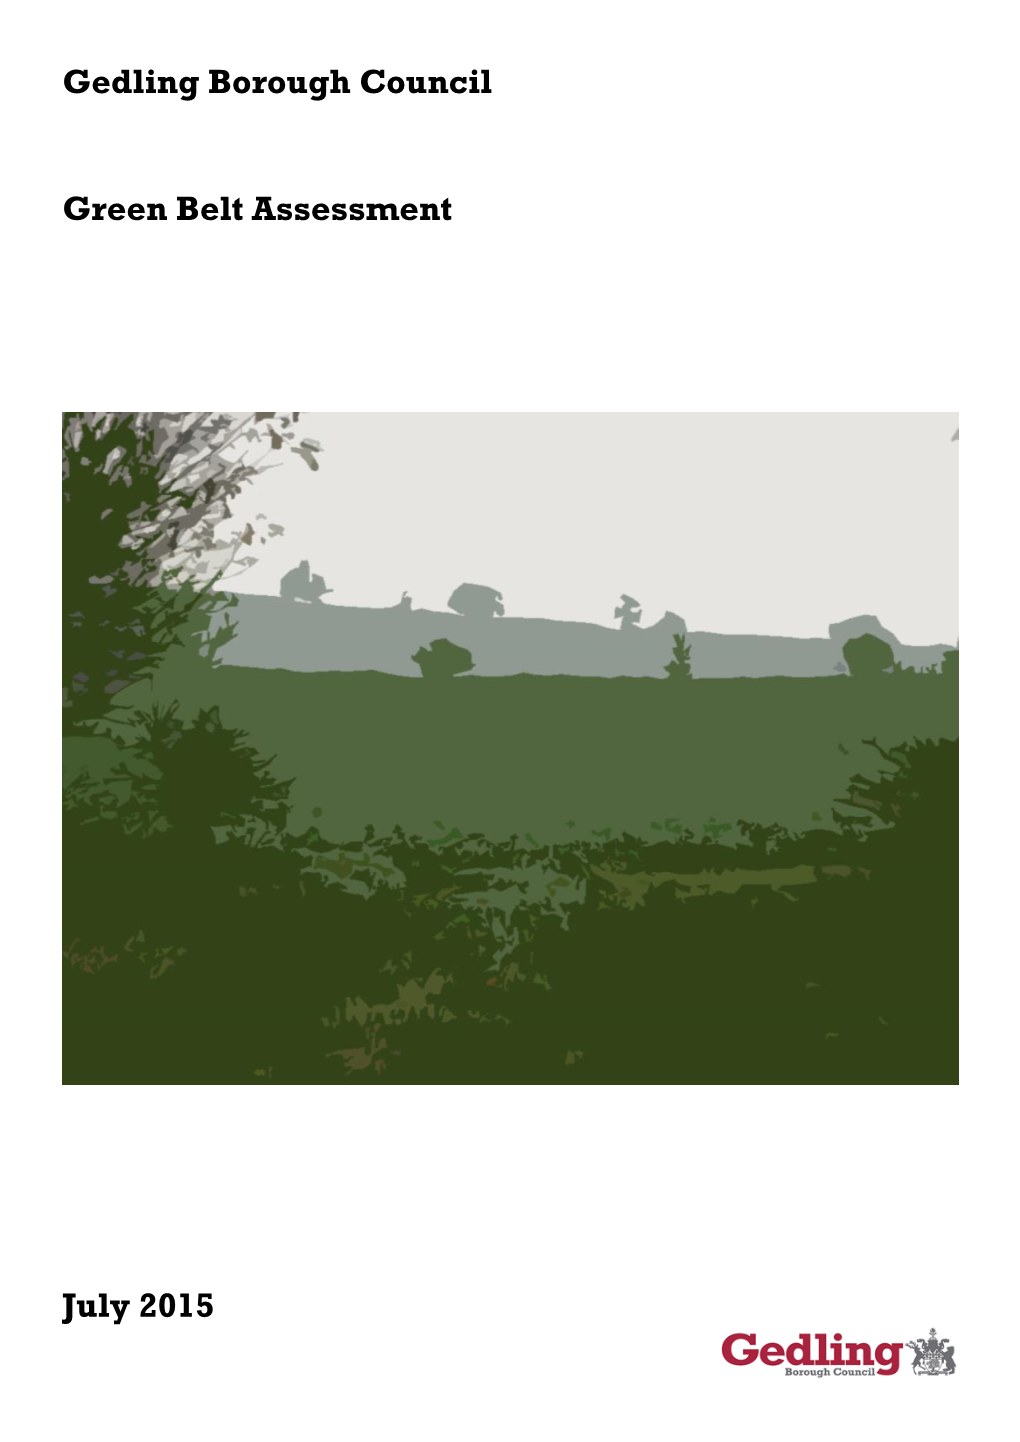 Gedling Borough Council Green Belt Assessment July 2015